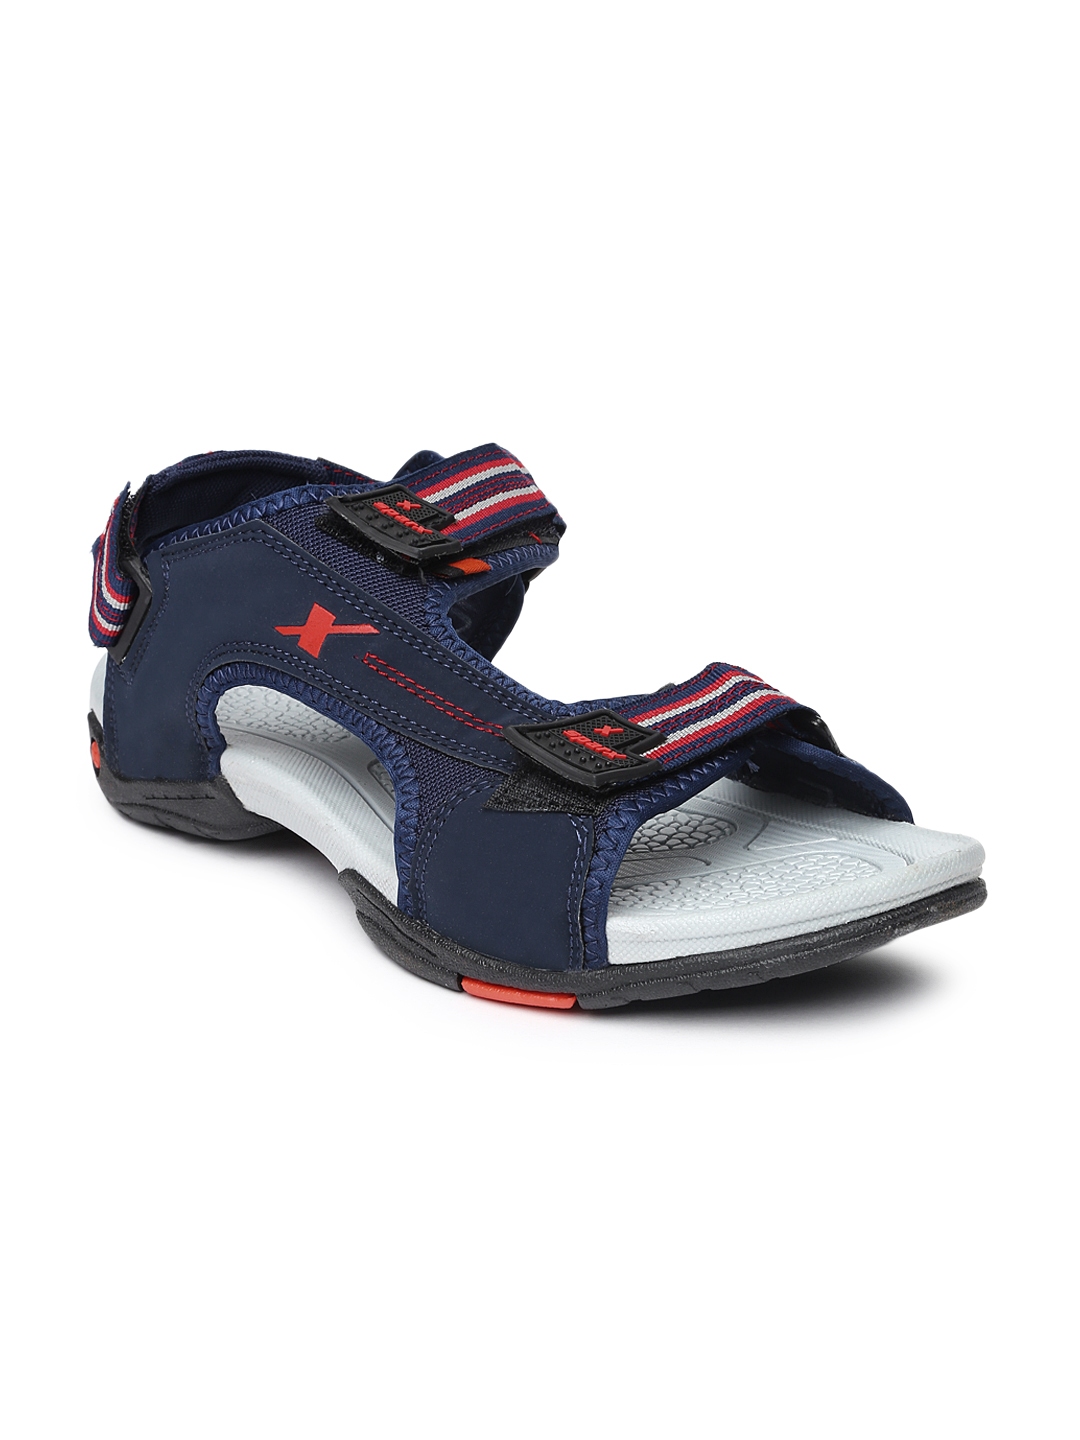 Buy Sparx Men Blue Sports Sandals Sports Sandals for Men